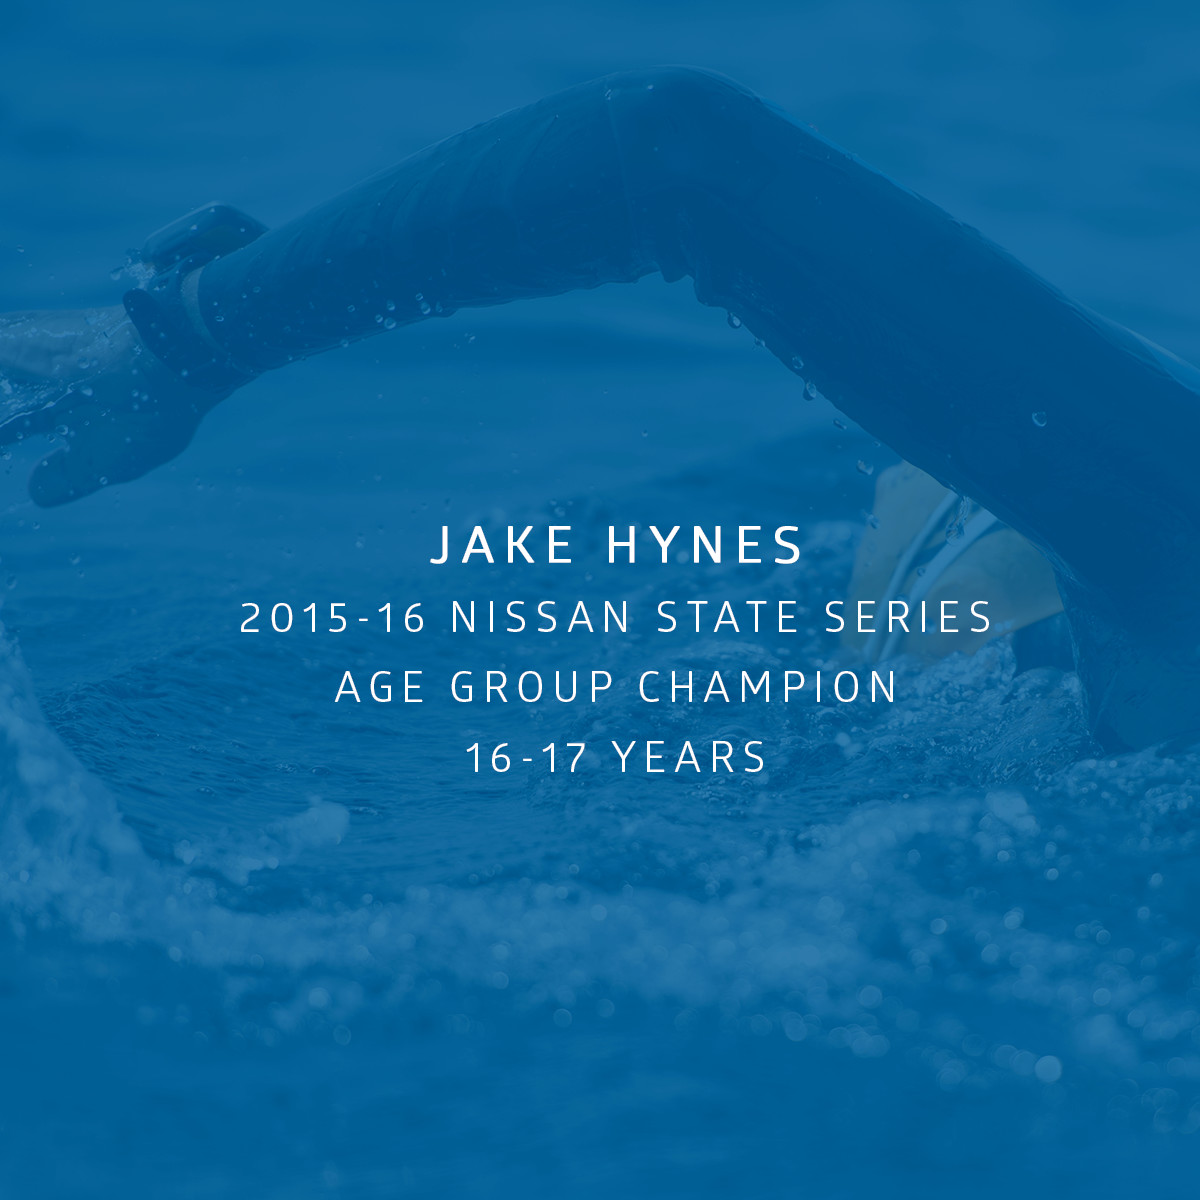 Jake Hynes